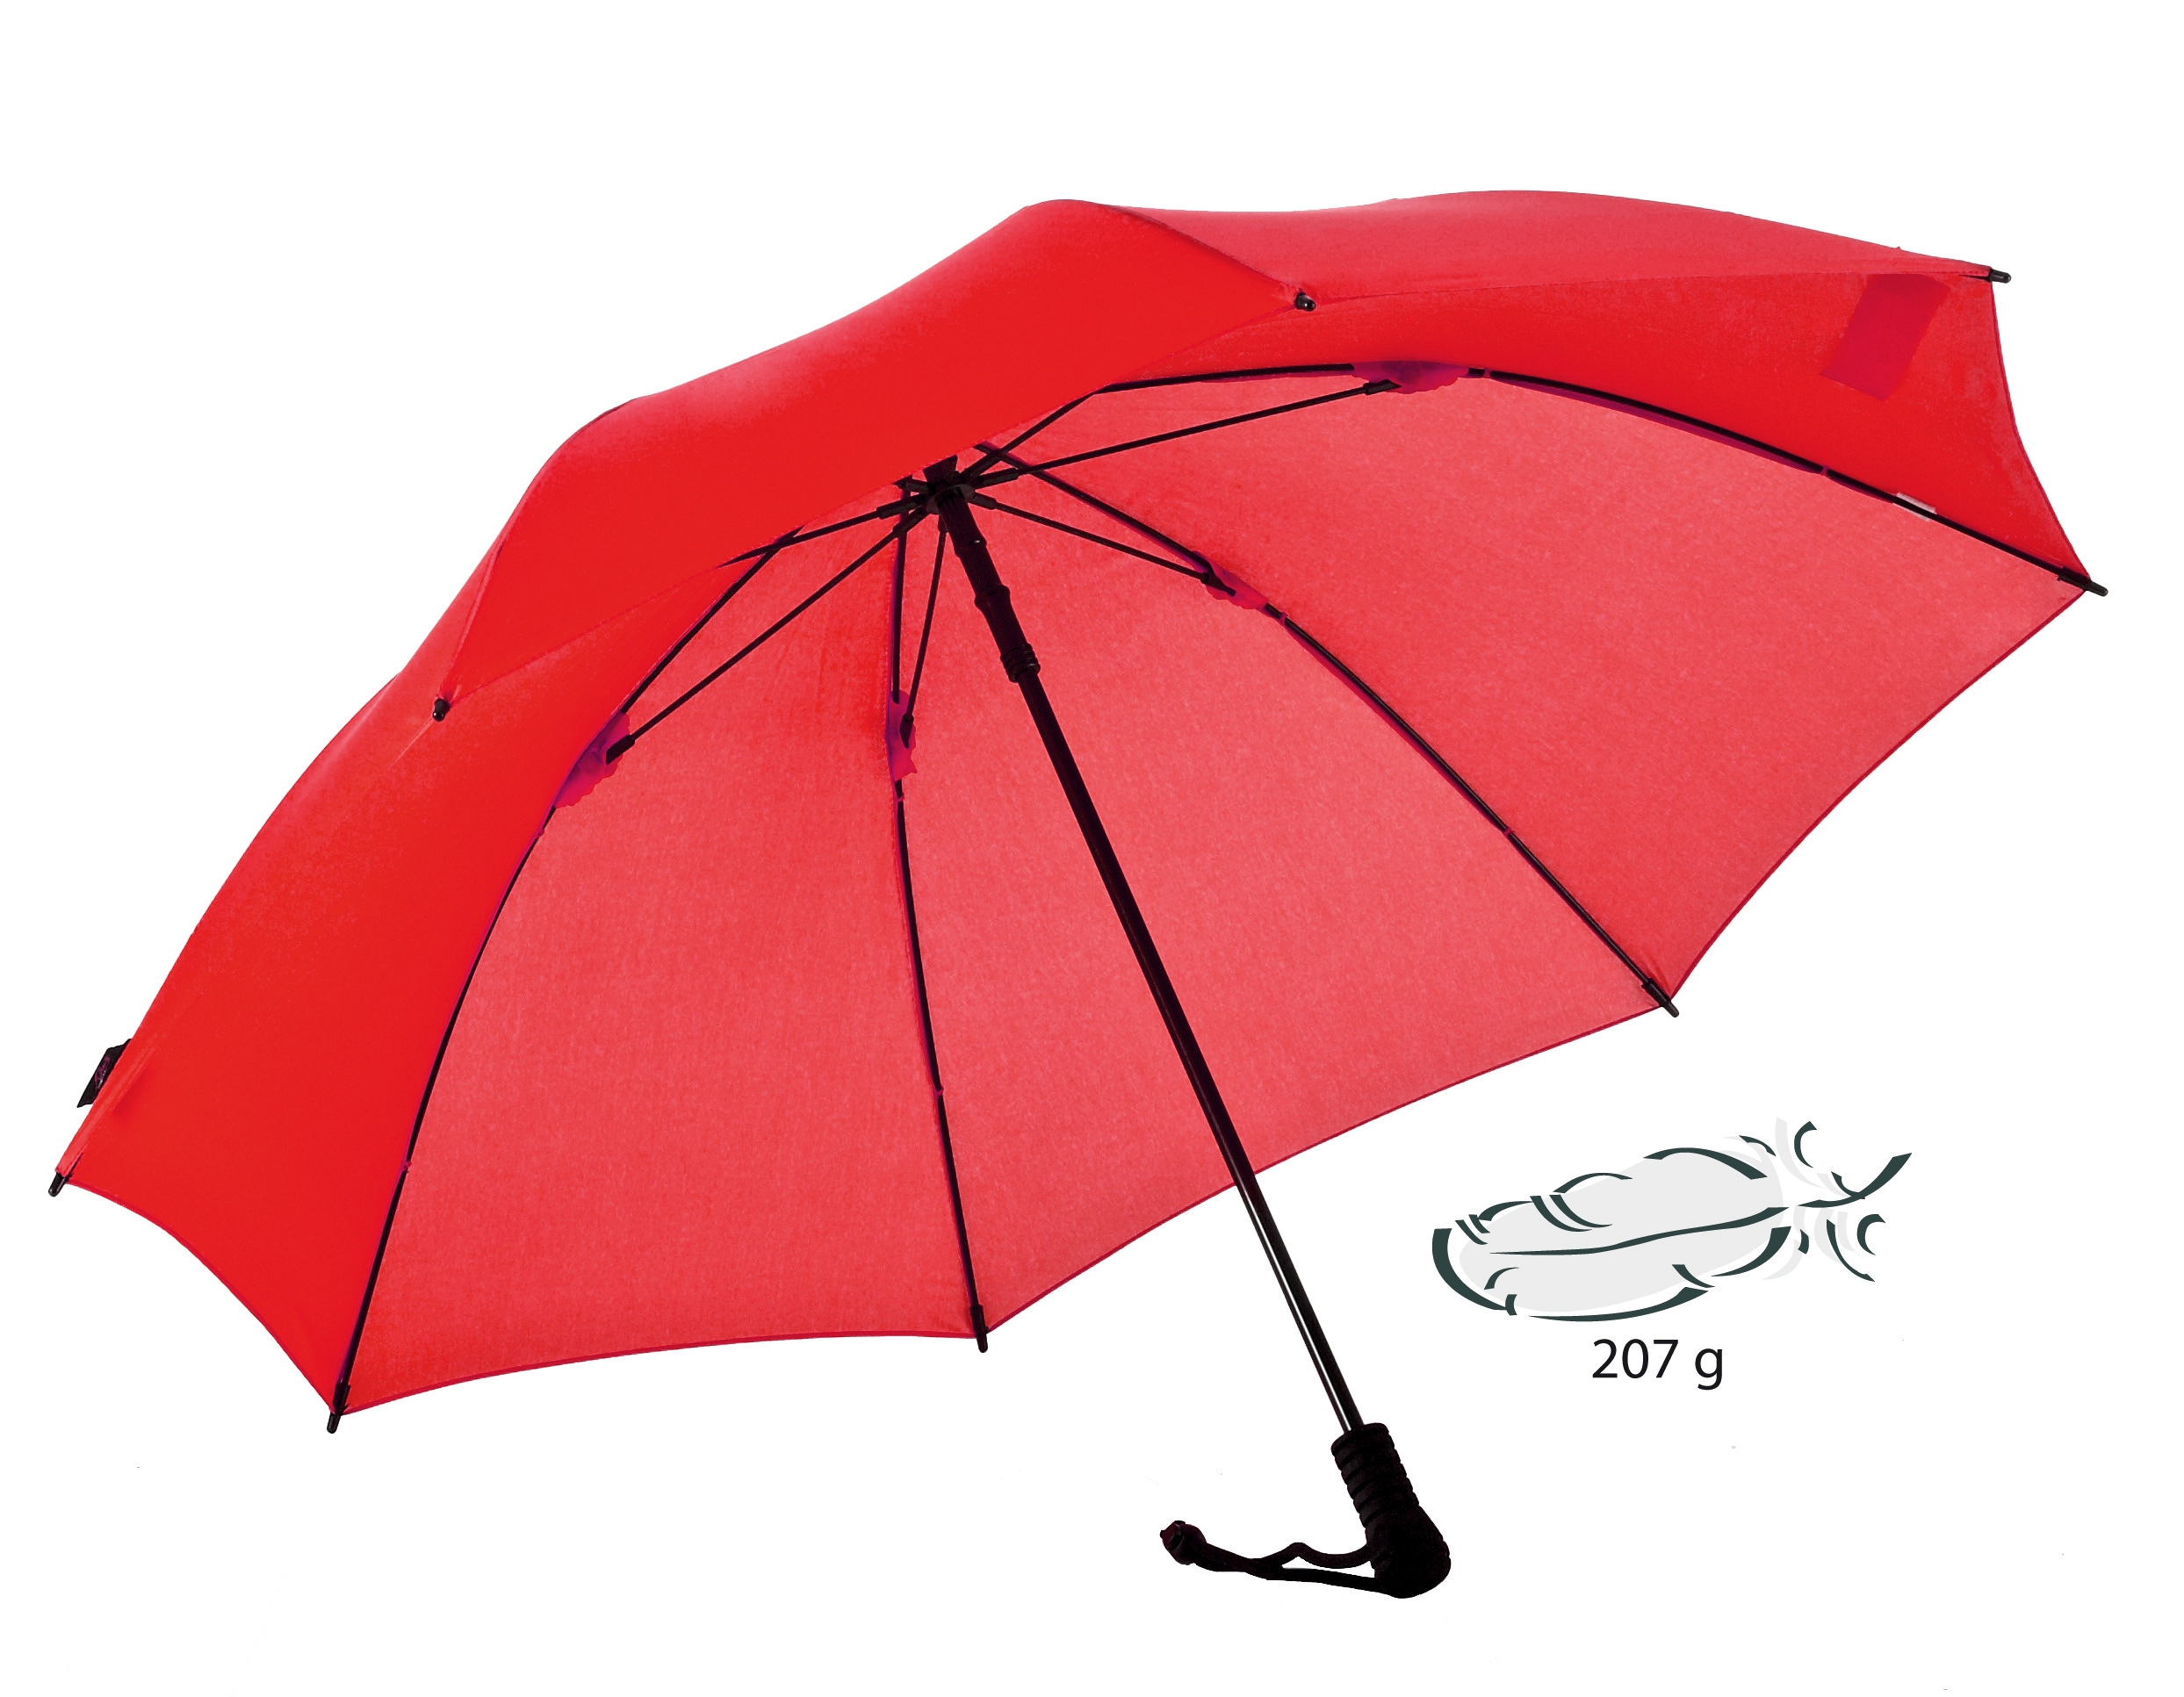 miniatura 2 - Euro ombrello Swing Liteflex Trekking OMBRELLONE ombrello speciale schermo TOP